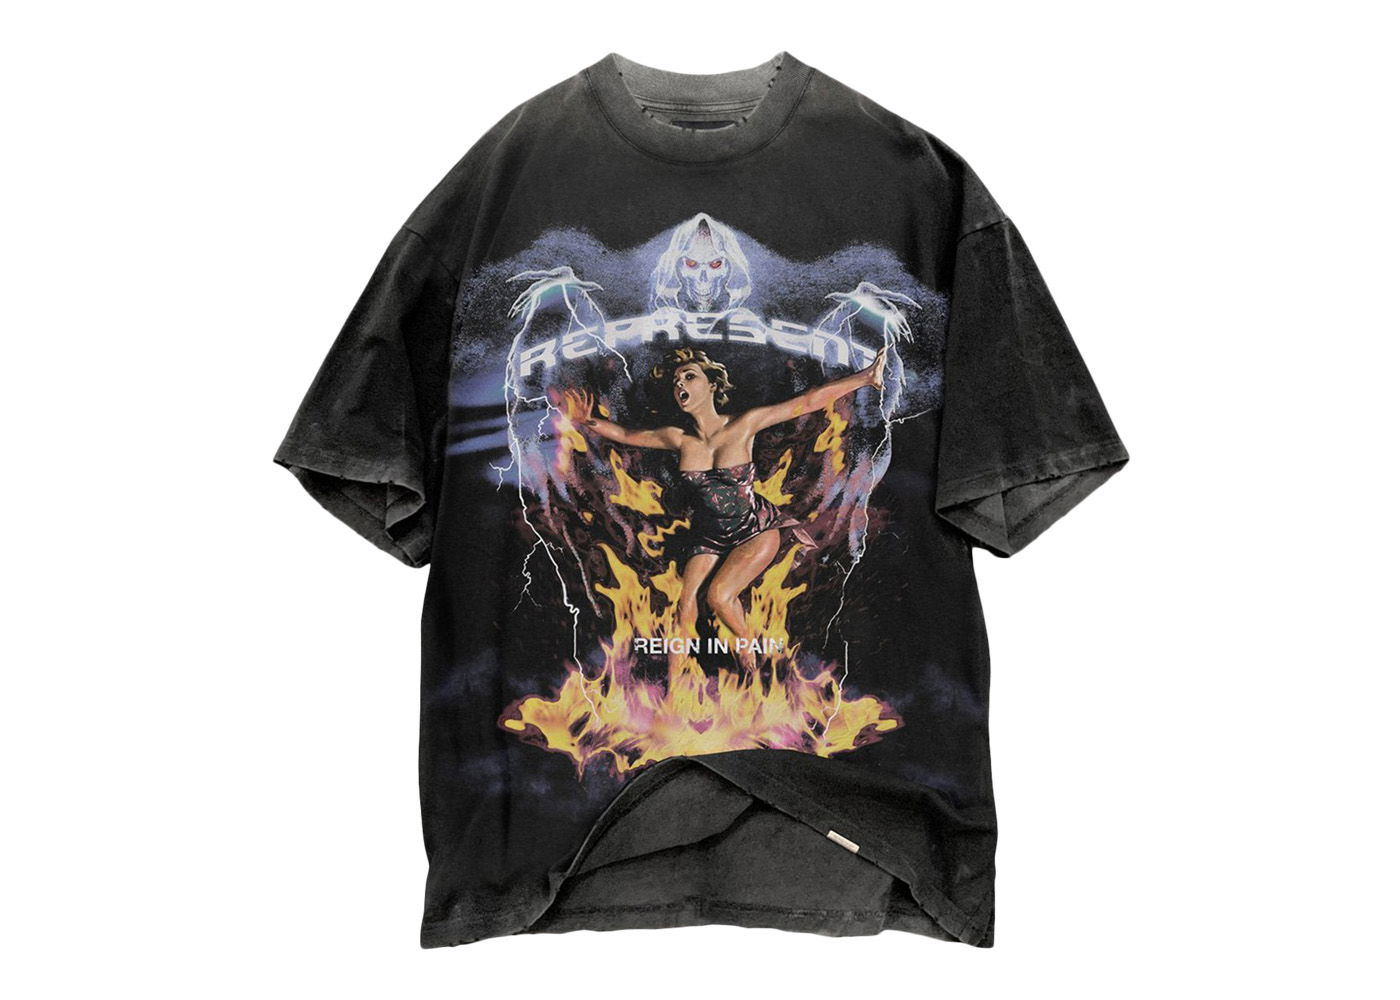 Represent Spirit Reaper Reign In Pain T-Shirt Vintage Black